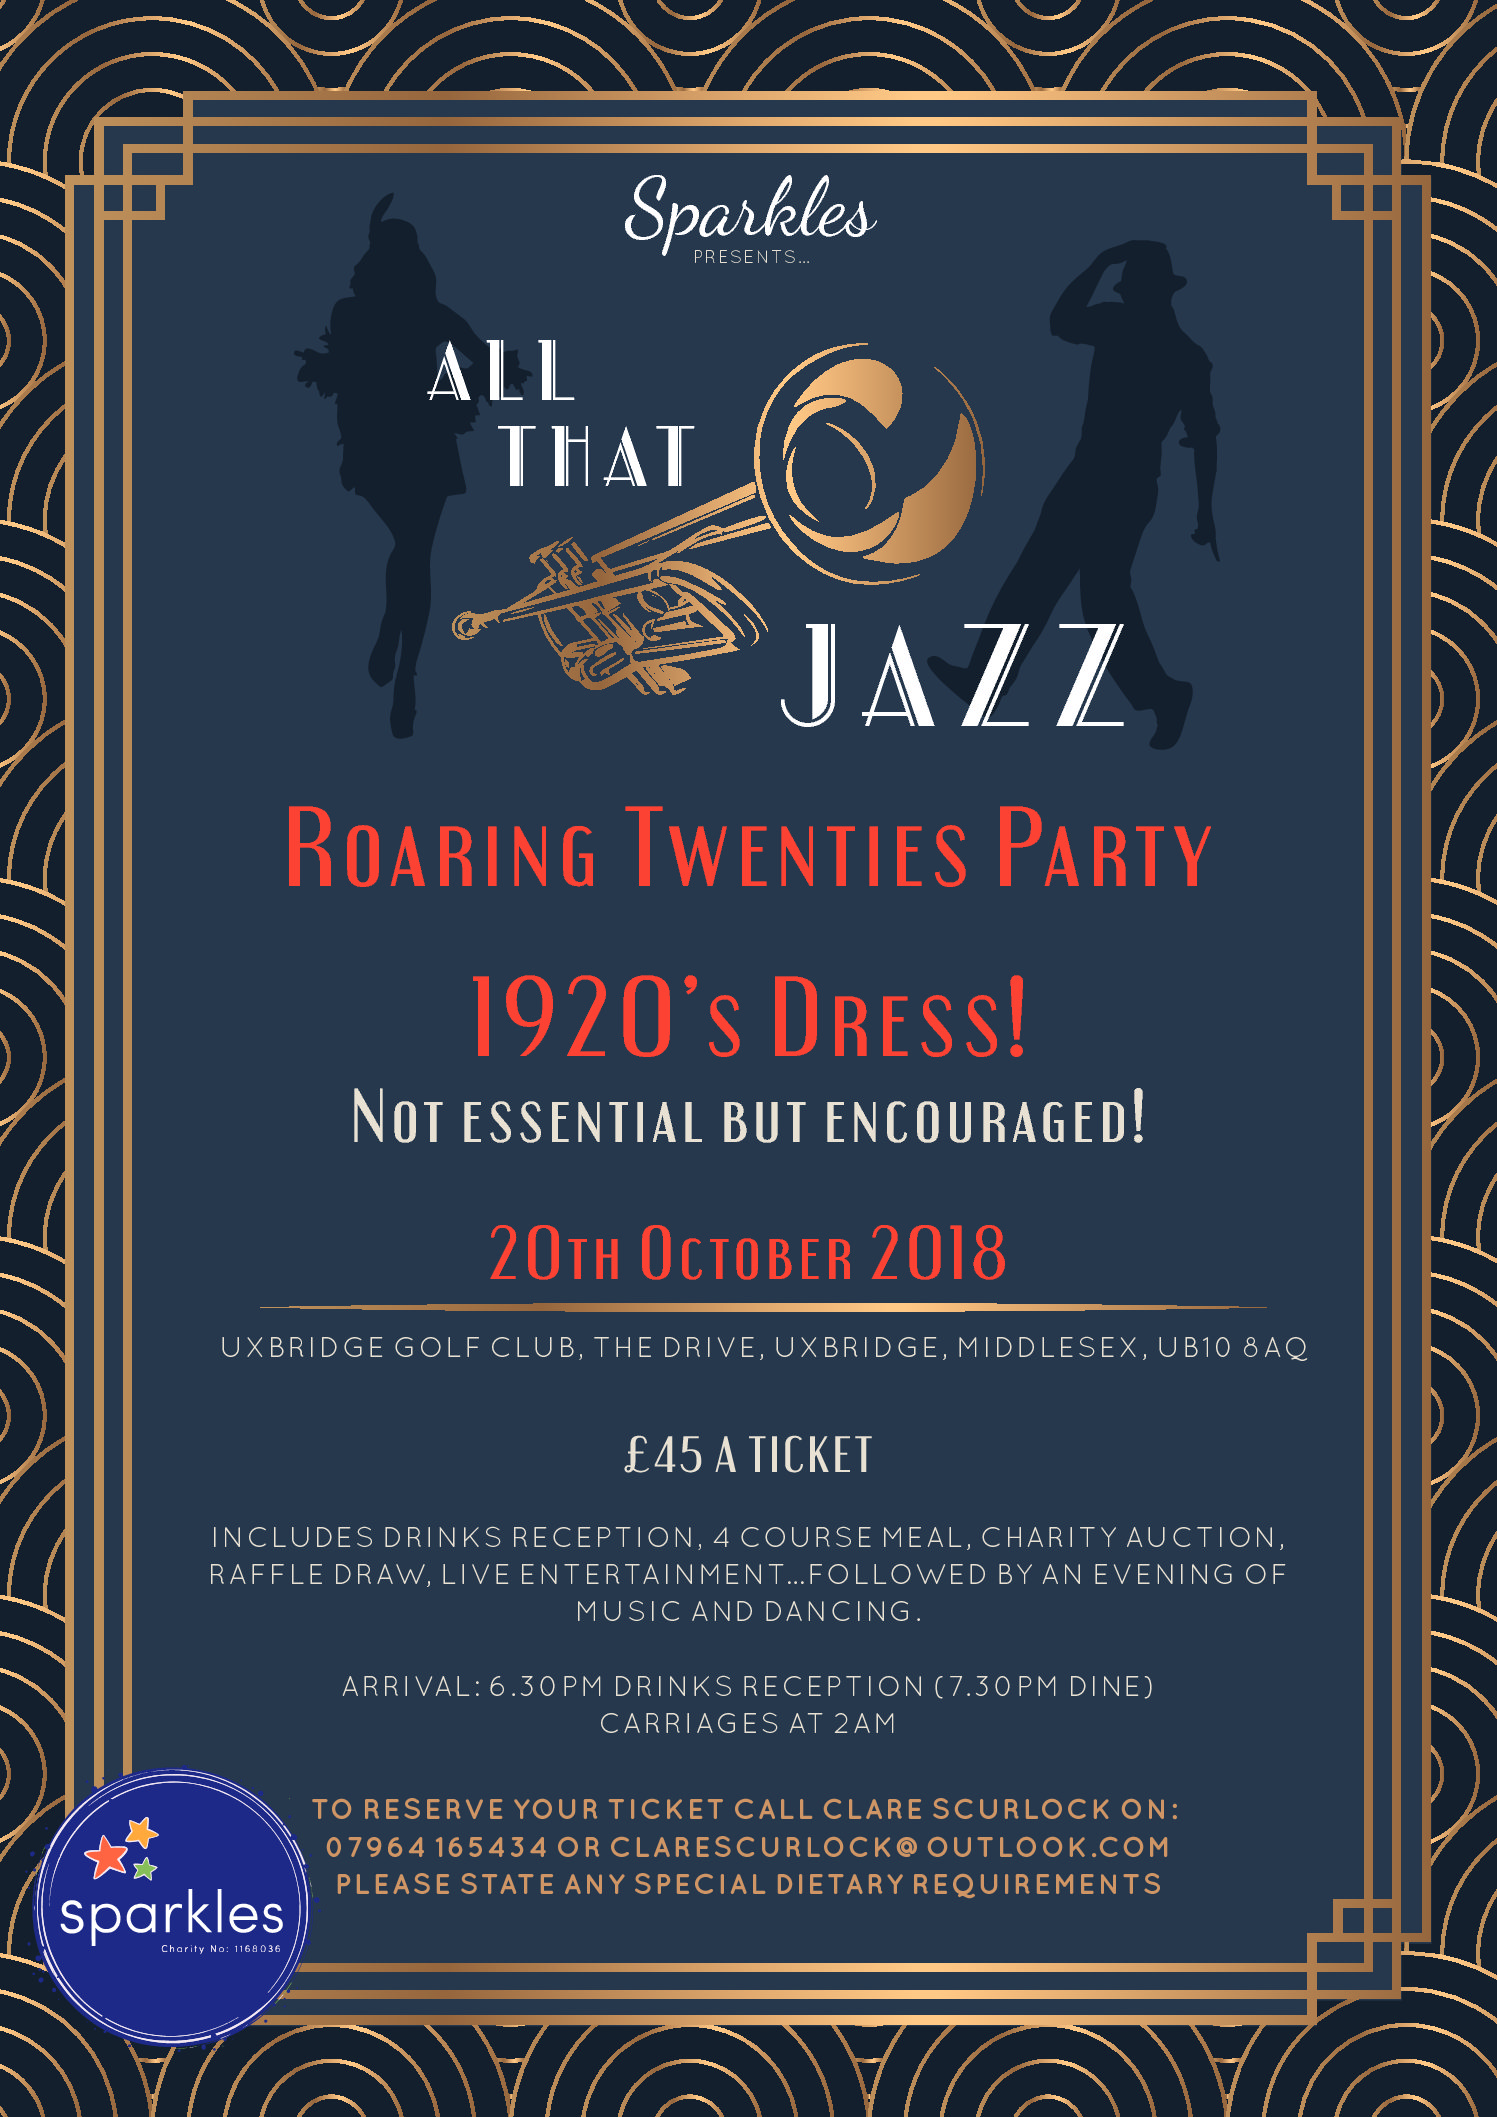 20th October 2018 – Sparkles Roaring Twenties Party!